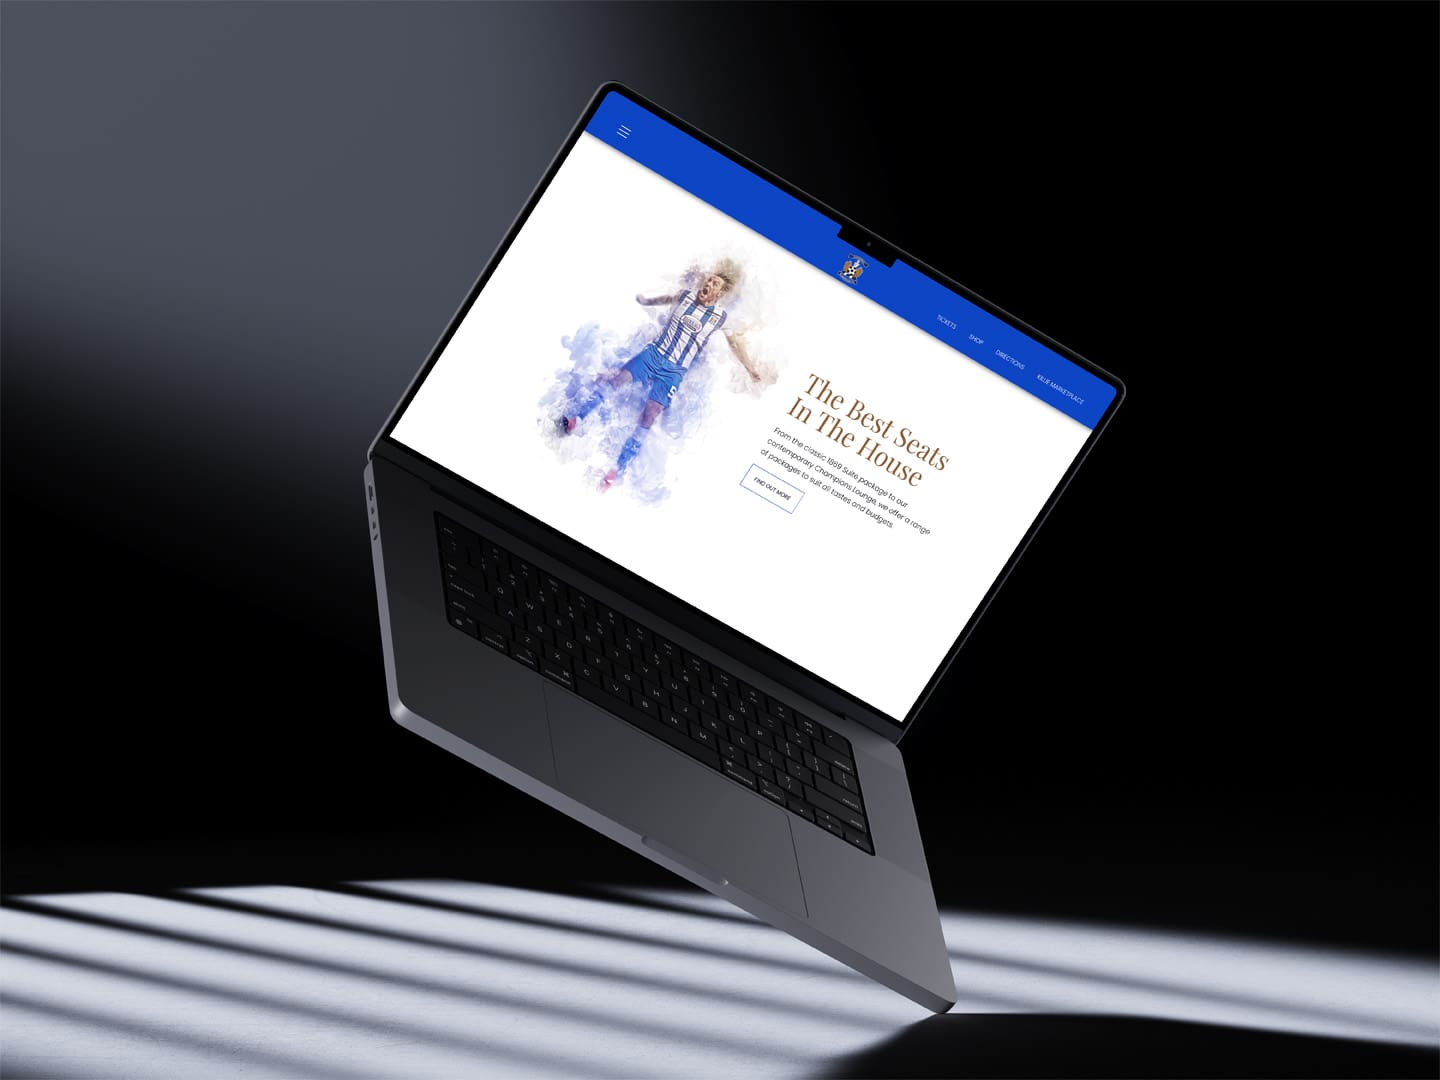 MacBook Pro laptop illustrating the Kilmarnock Football Club website